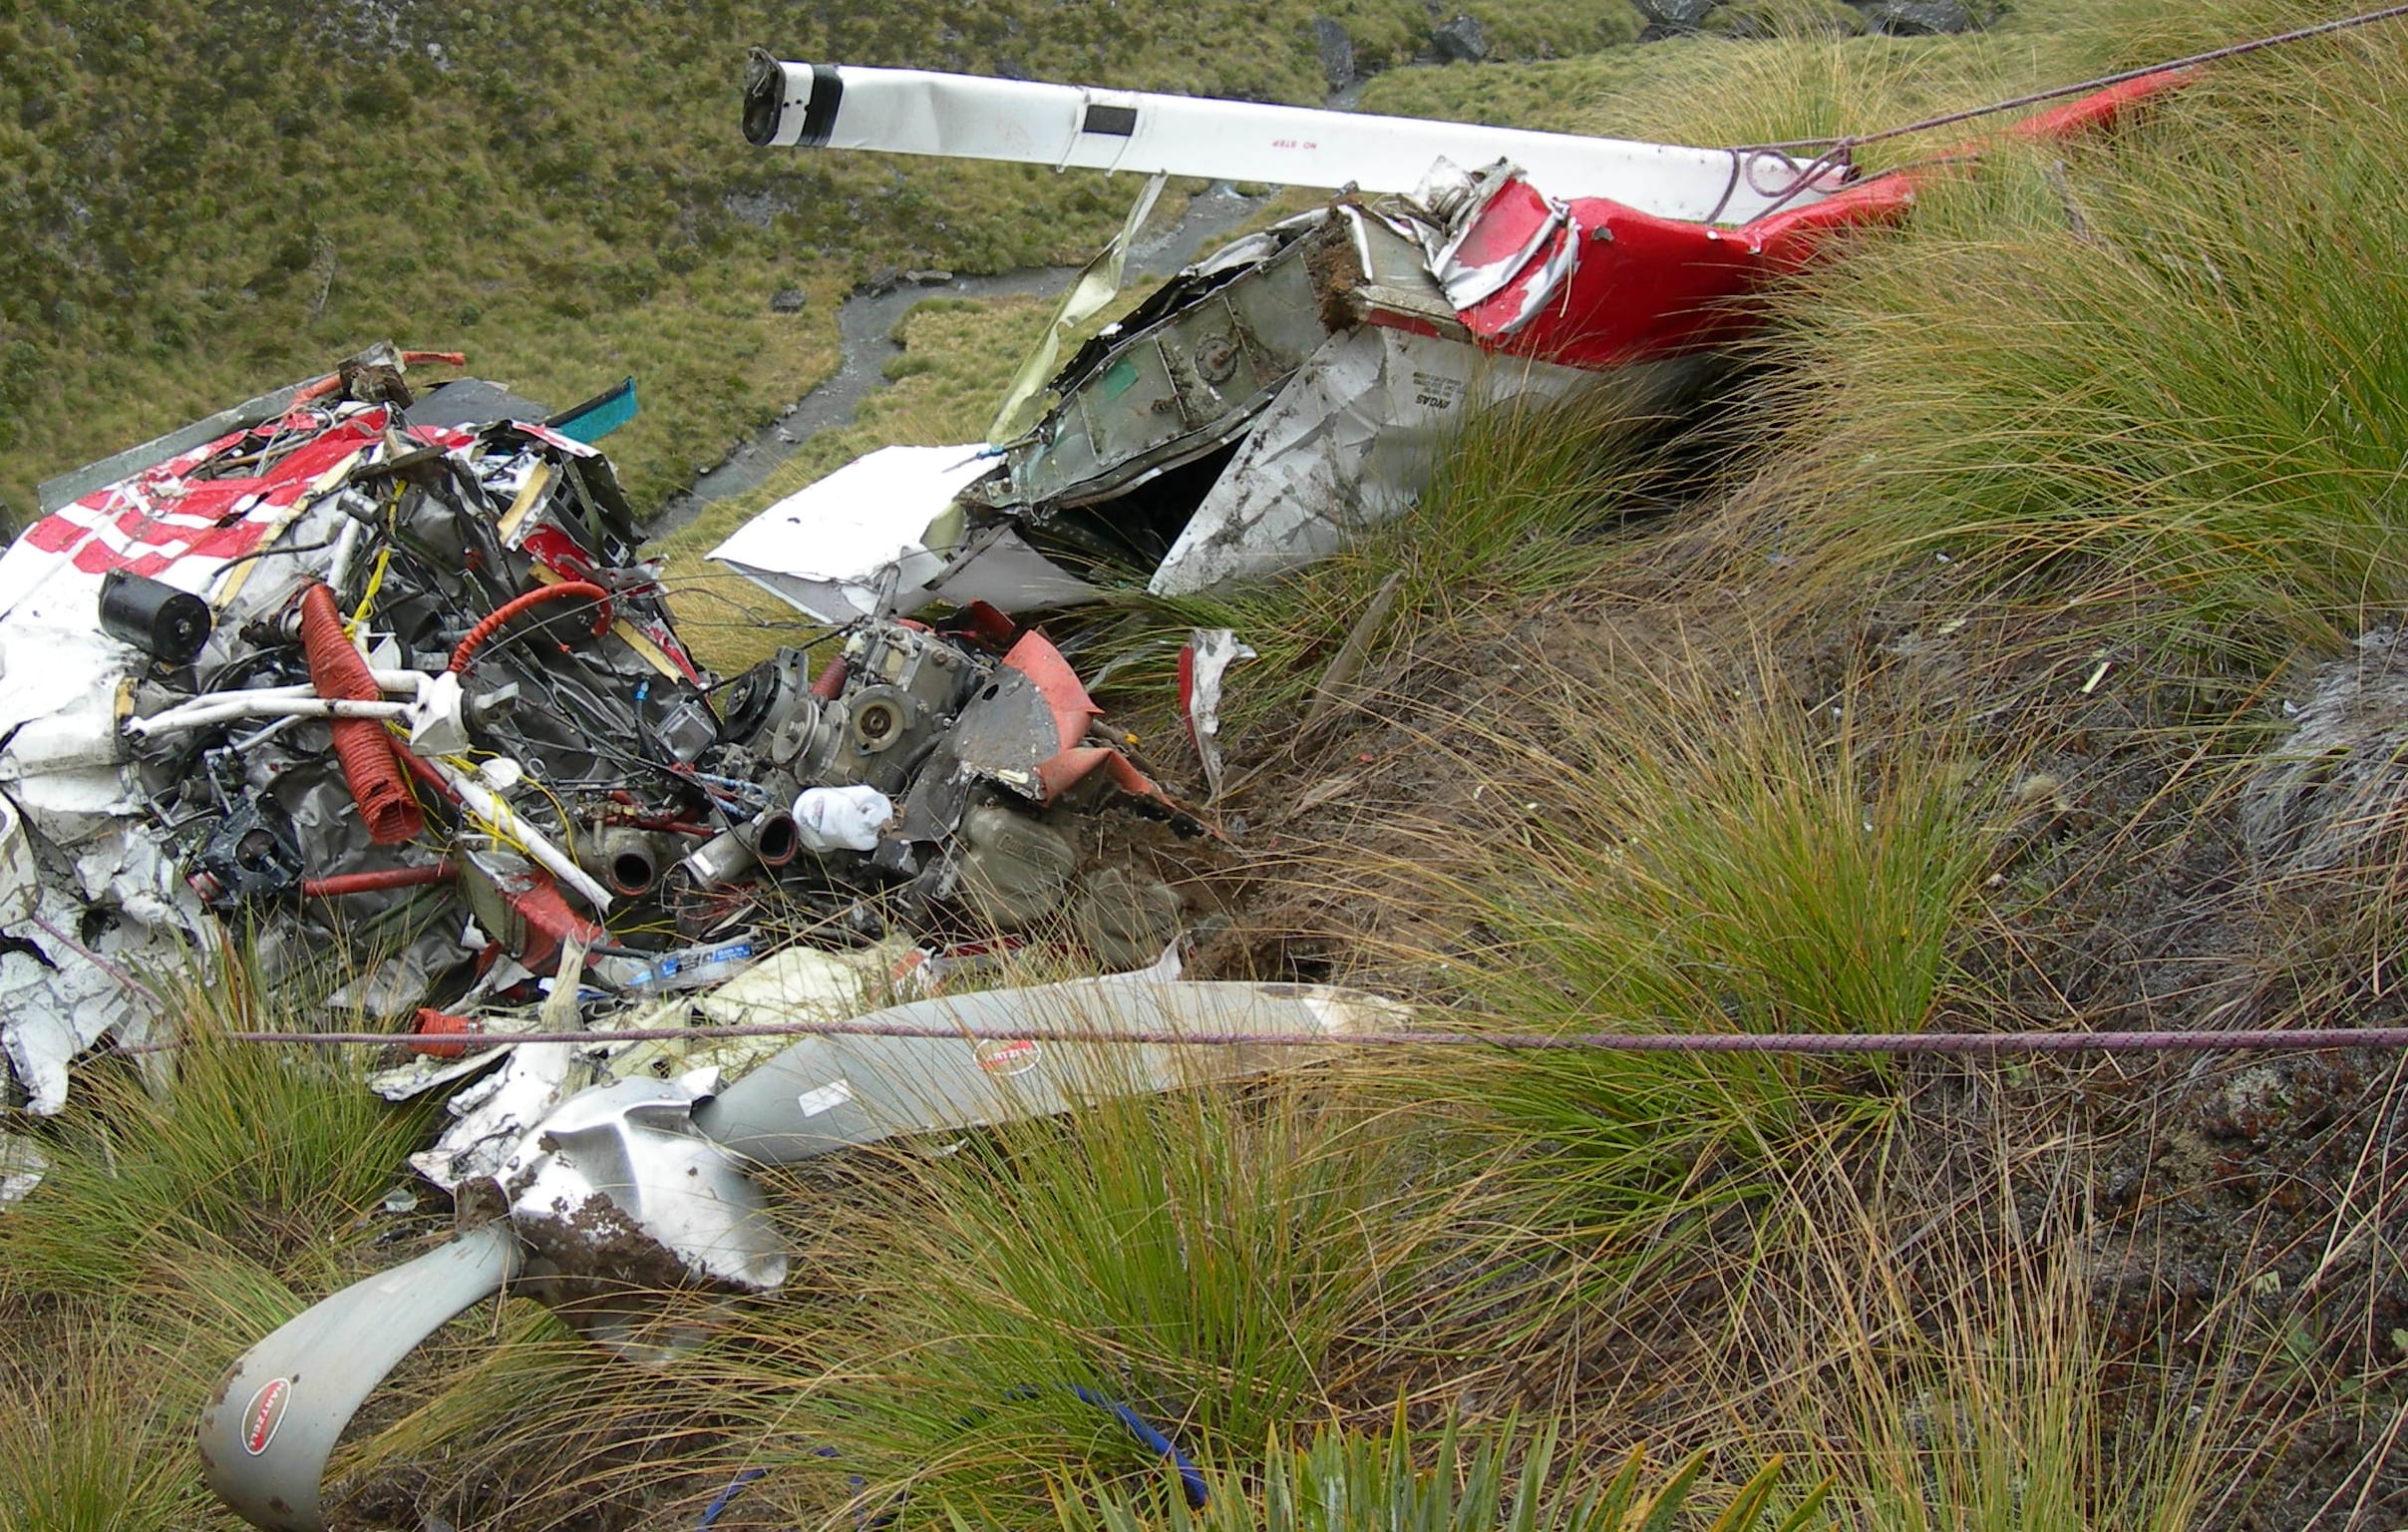 Photos of the fatal plane crash near Wanaka